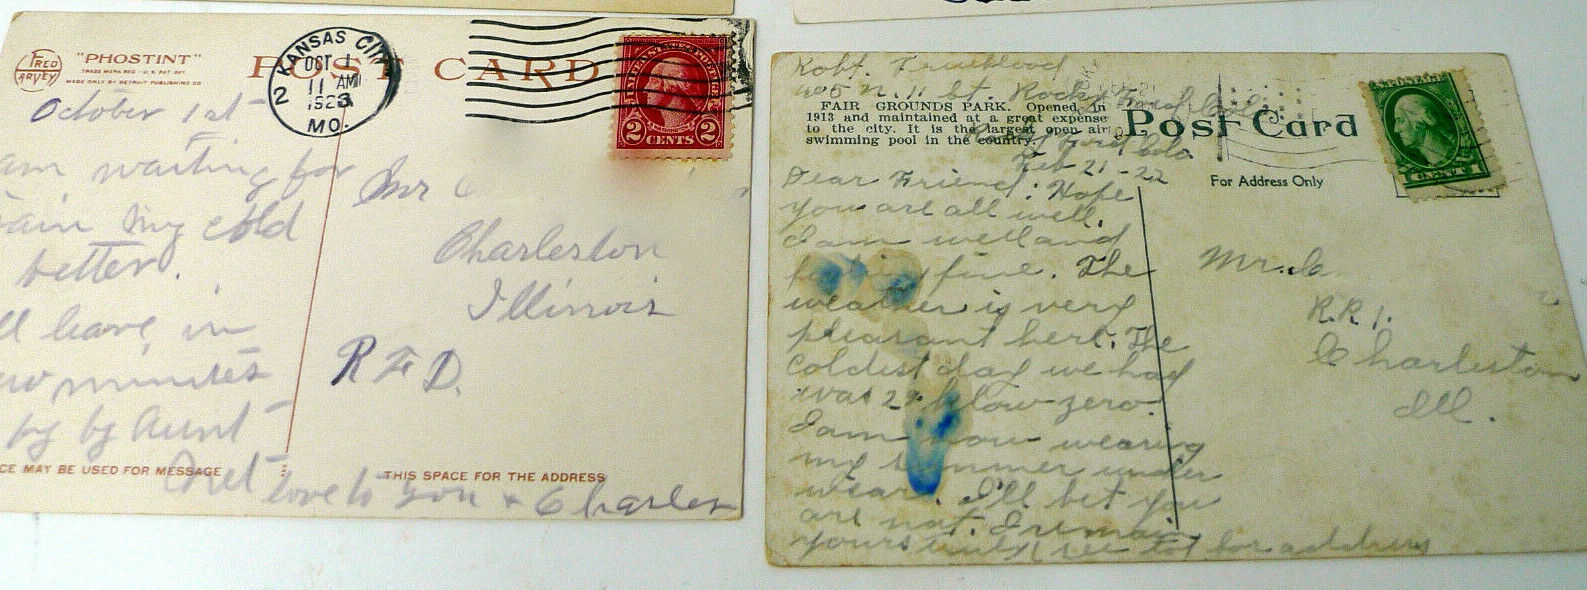 Postcard Vintage 1923 Posted Phostint Baltimore Hotel KC Missouri St Louis Fair